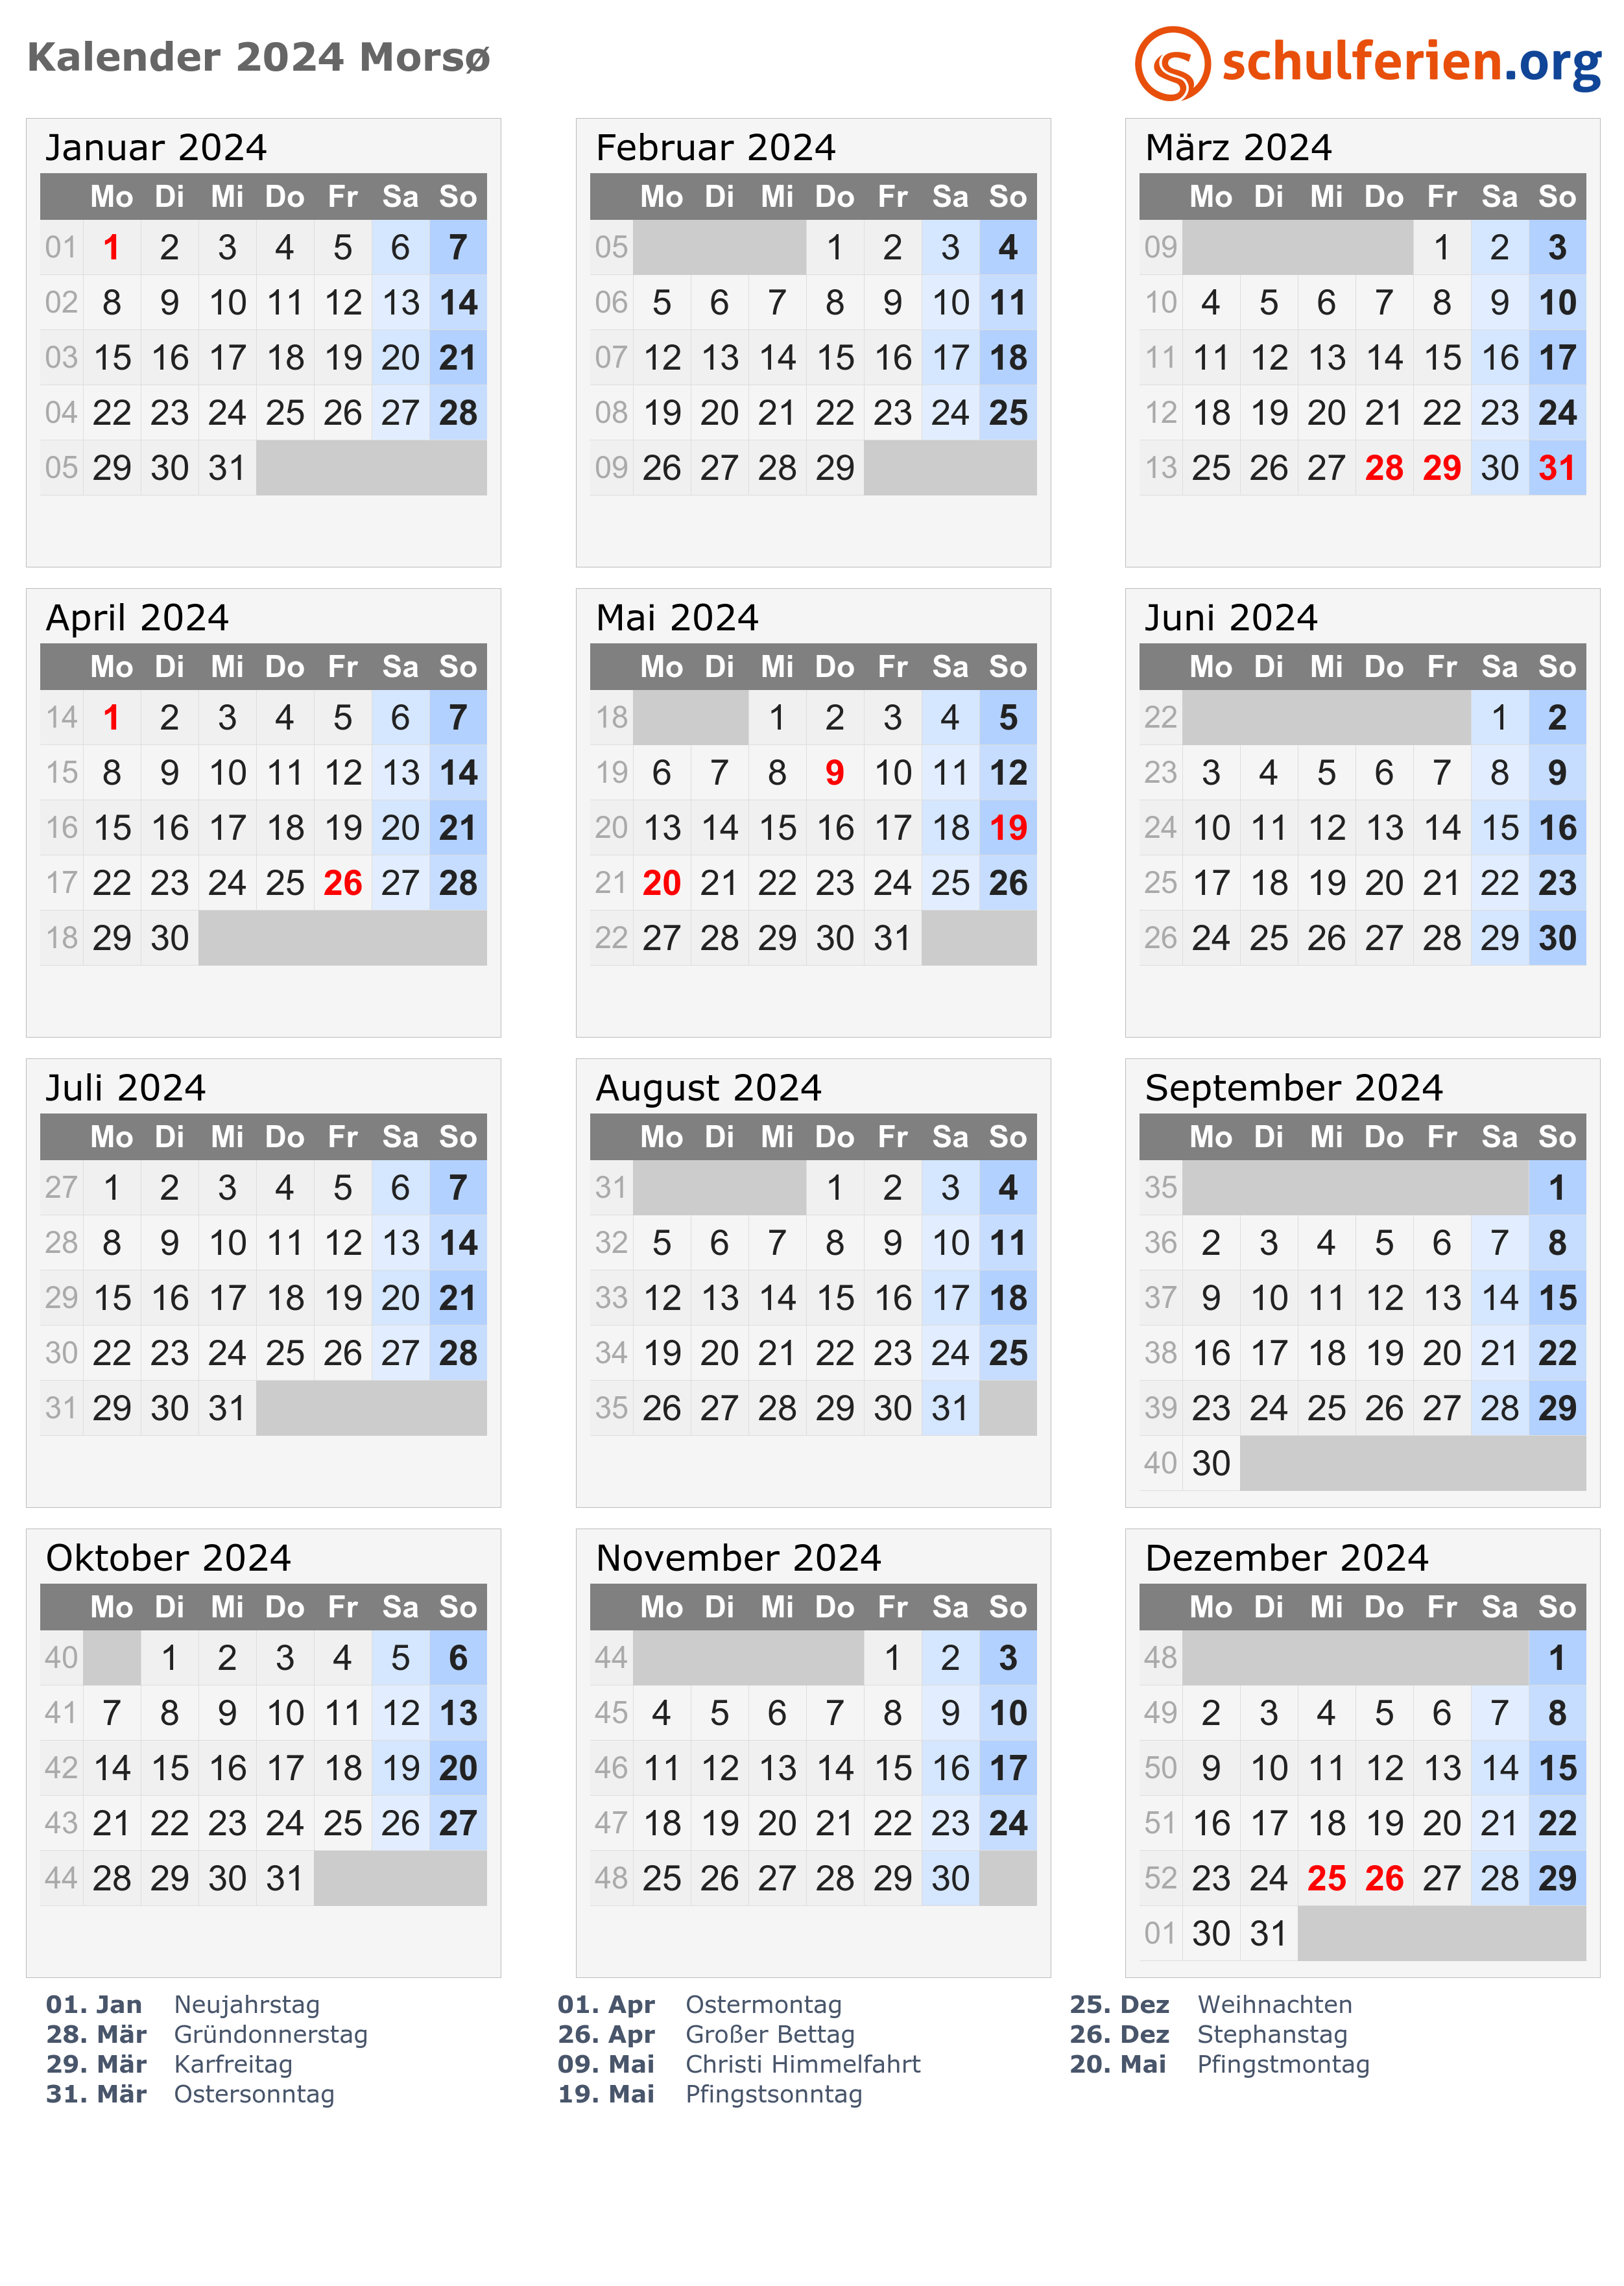 Academic Calendar 2024 25 2024 Calendar Printable Vrogue